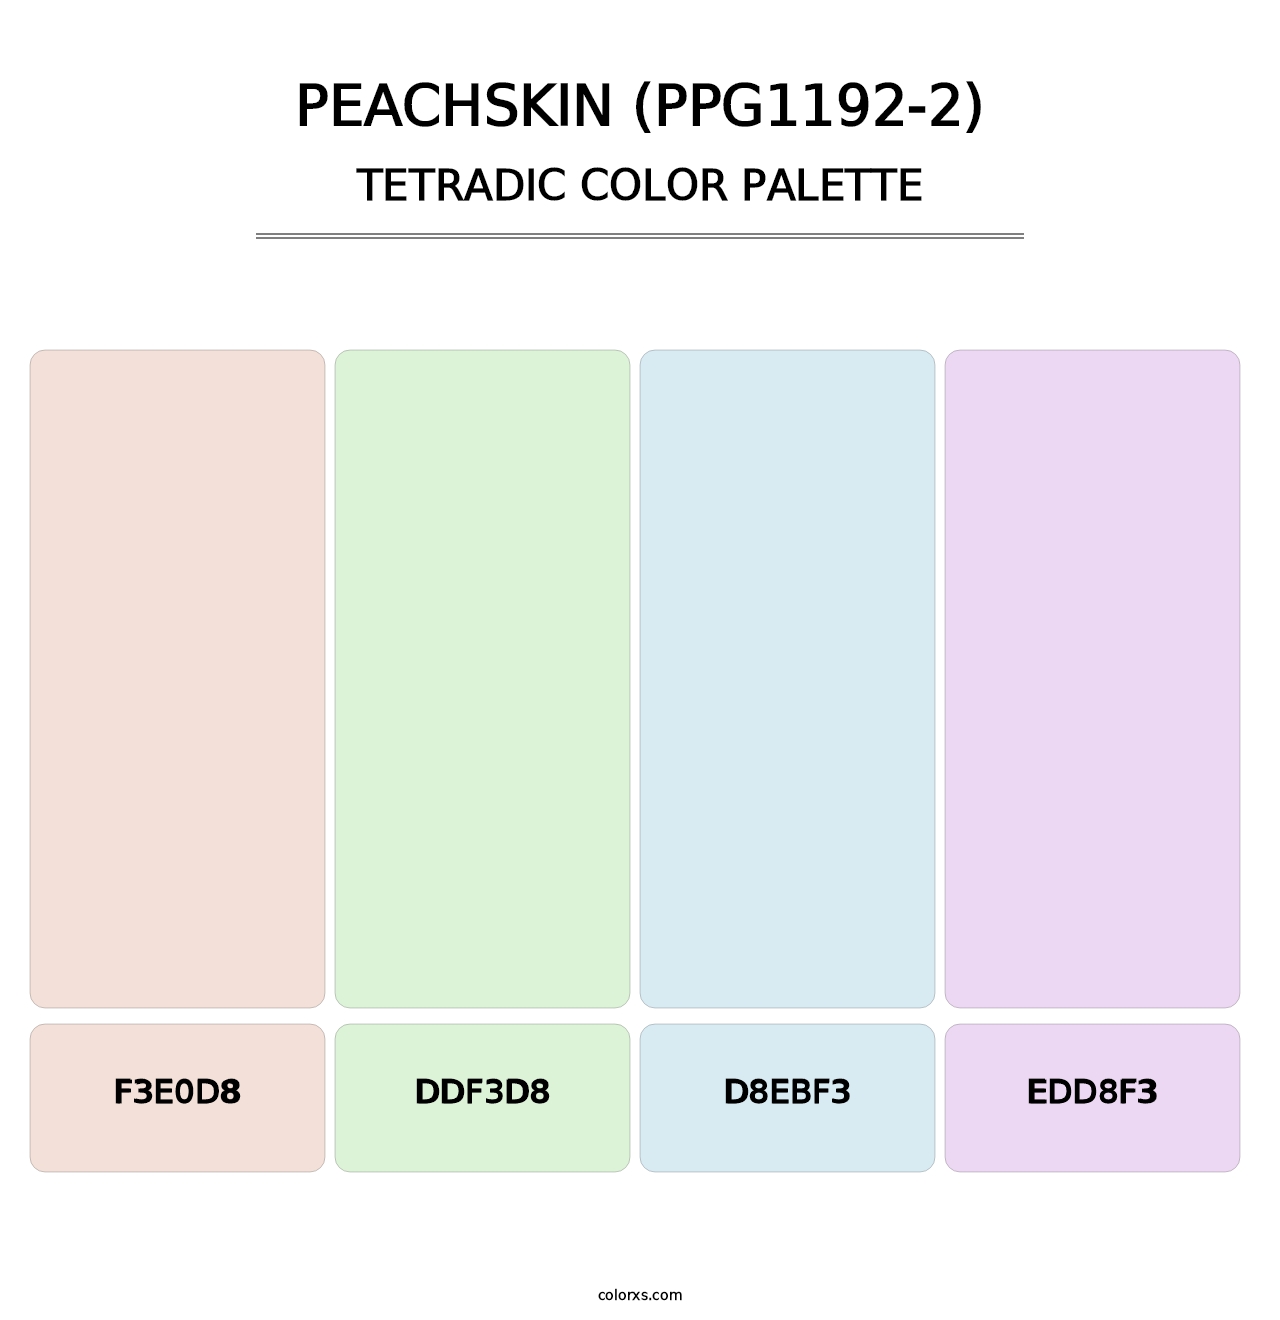 Peachskin (PPG1192-2) - Tetradic Color Palette